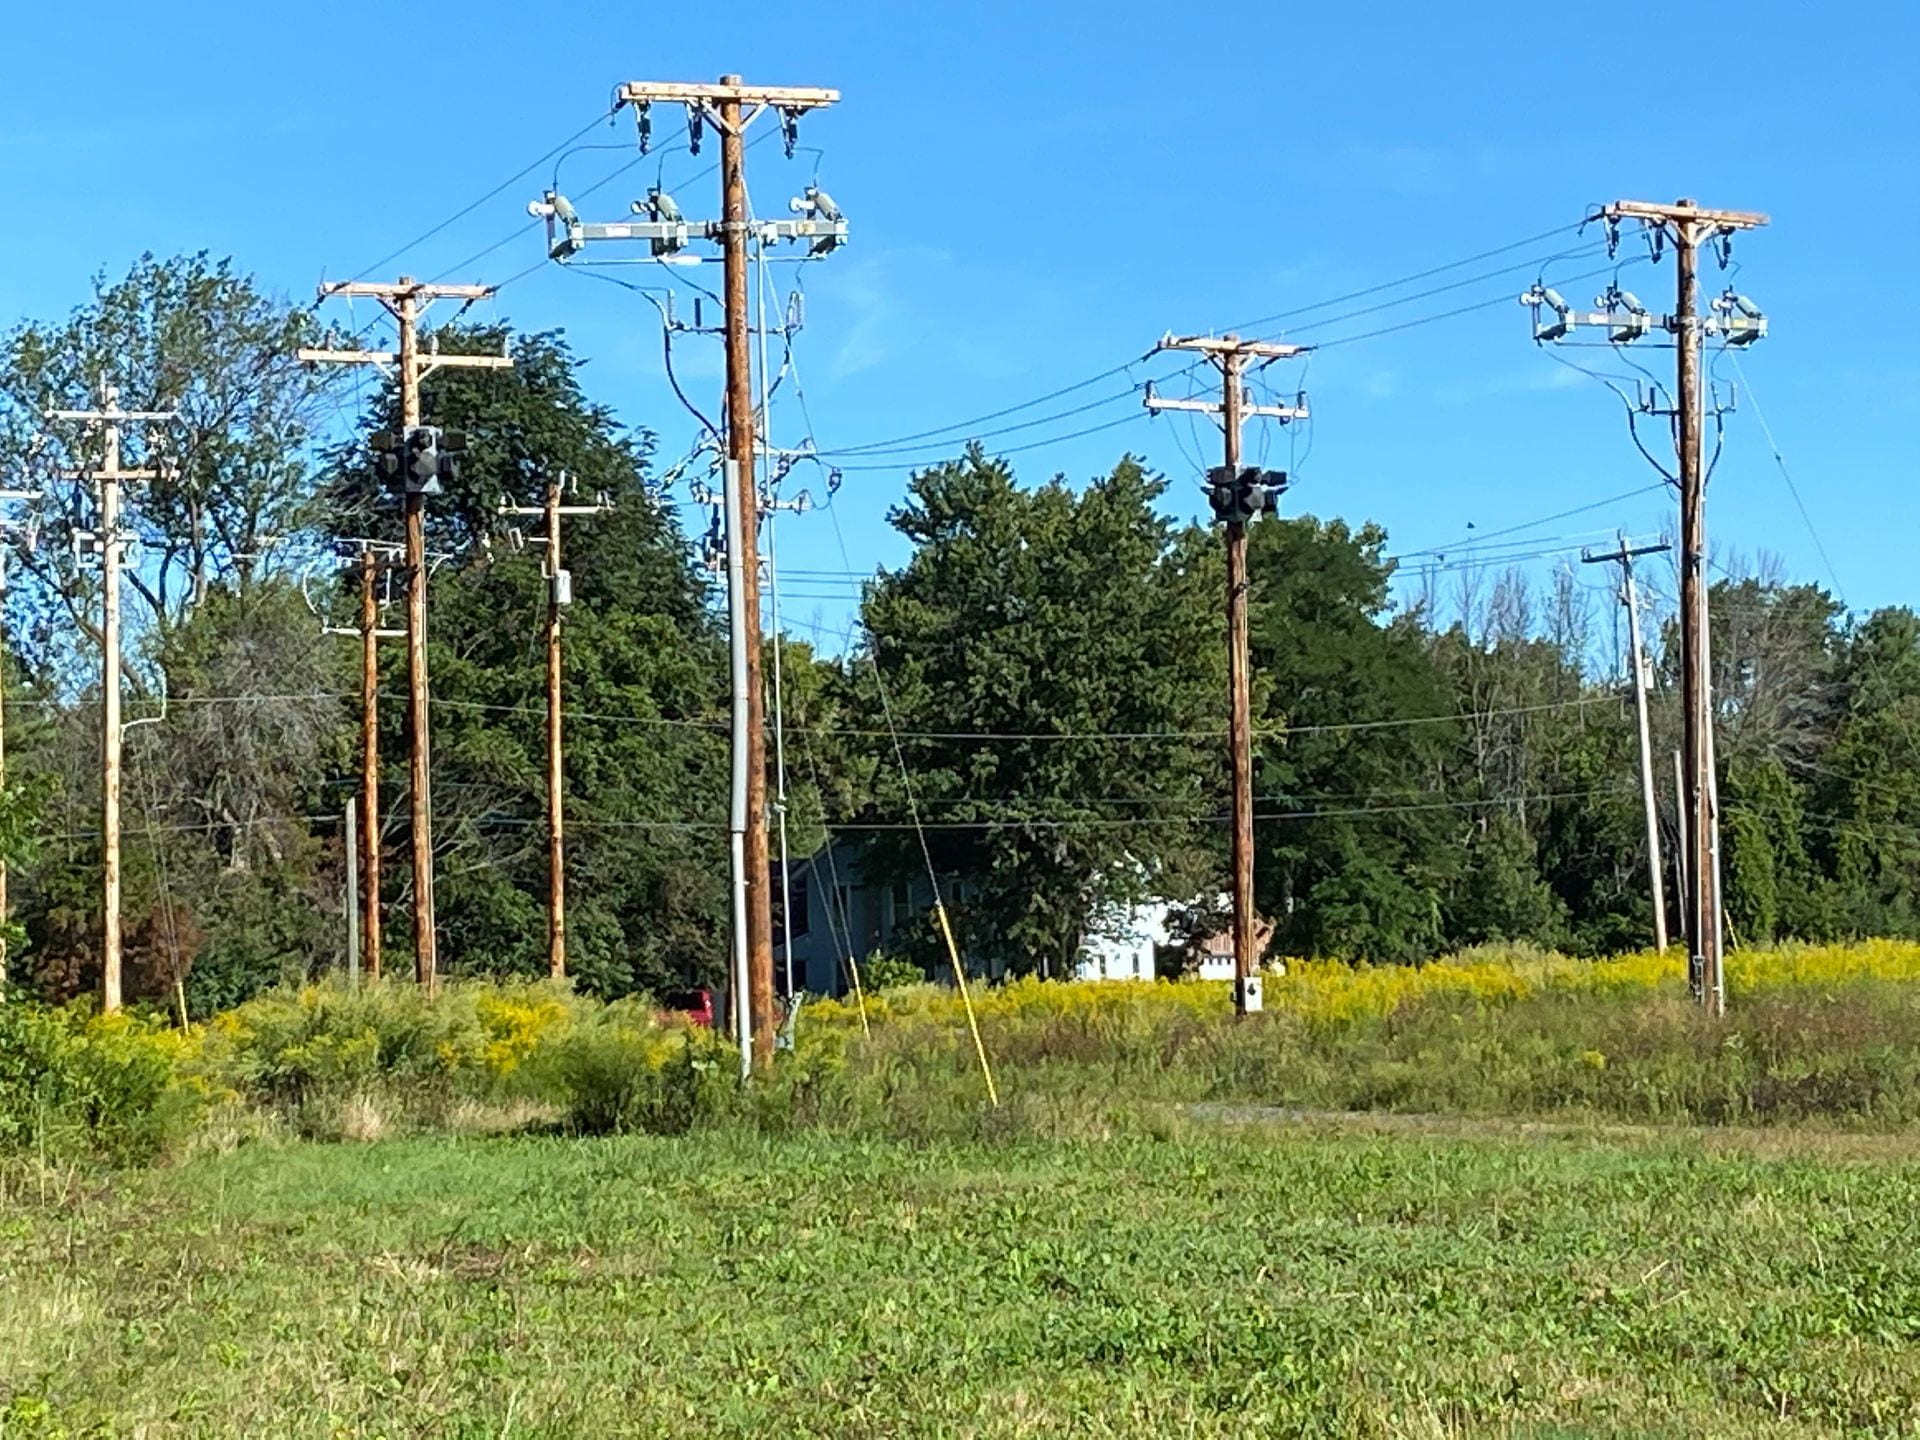 Roadside electric poles. Credit: Penn State MCOR